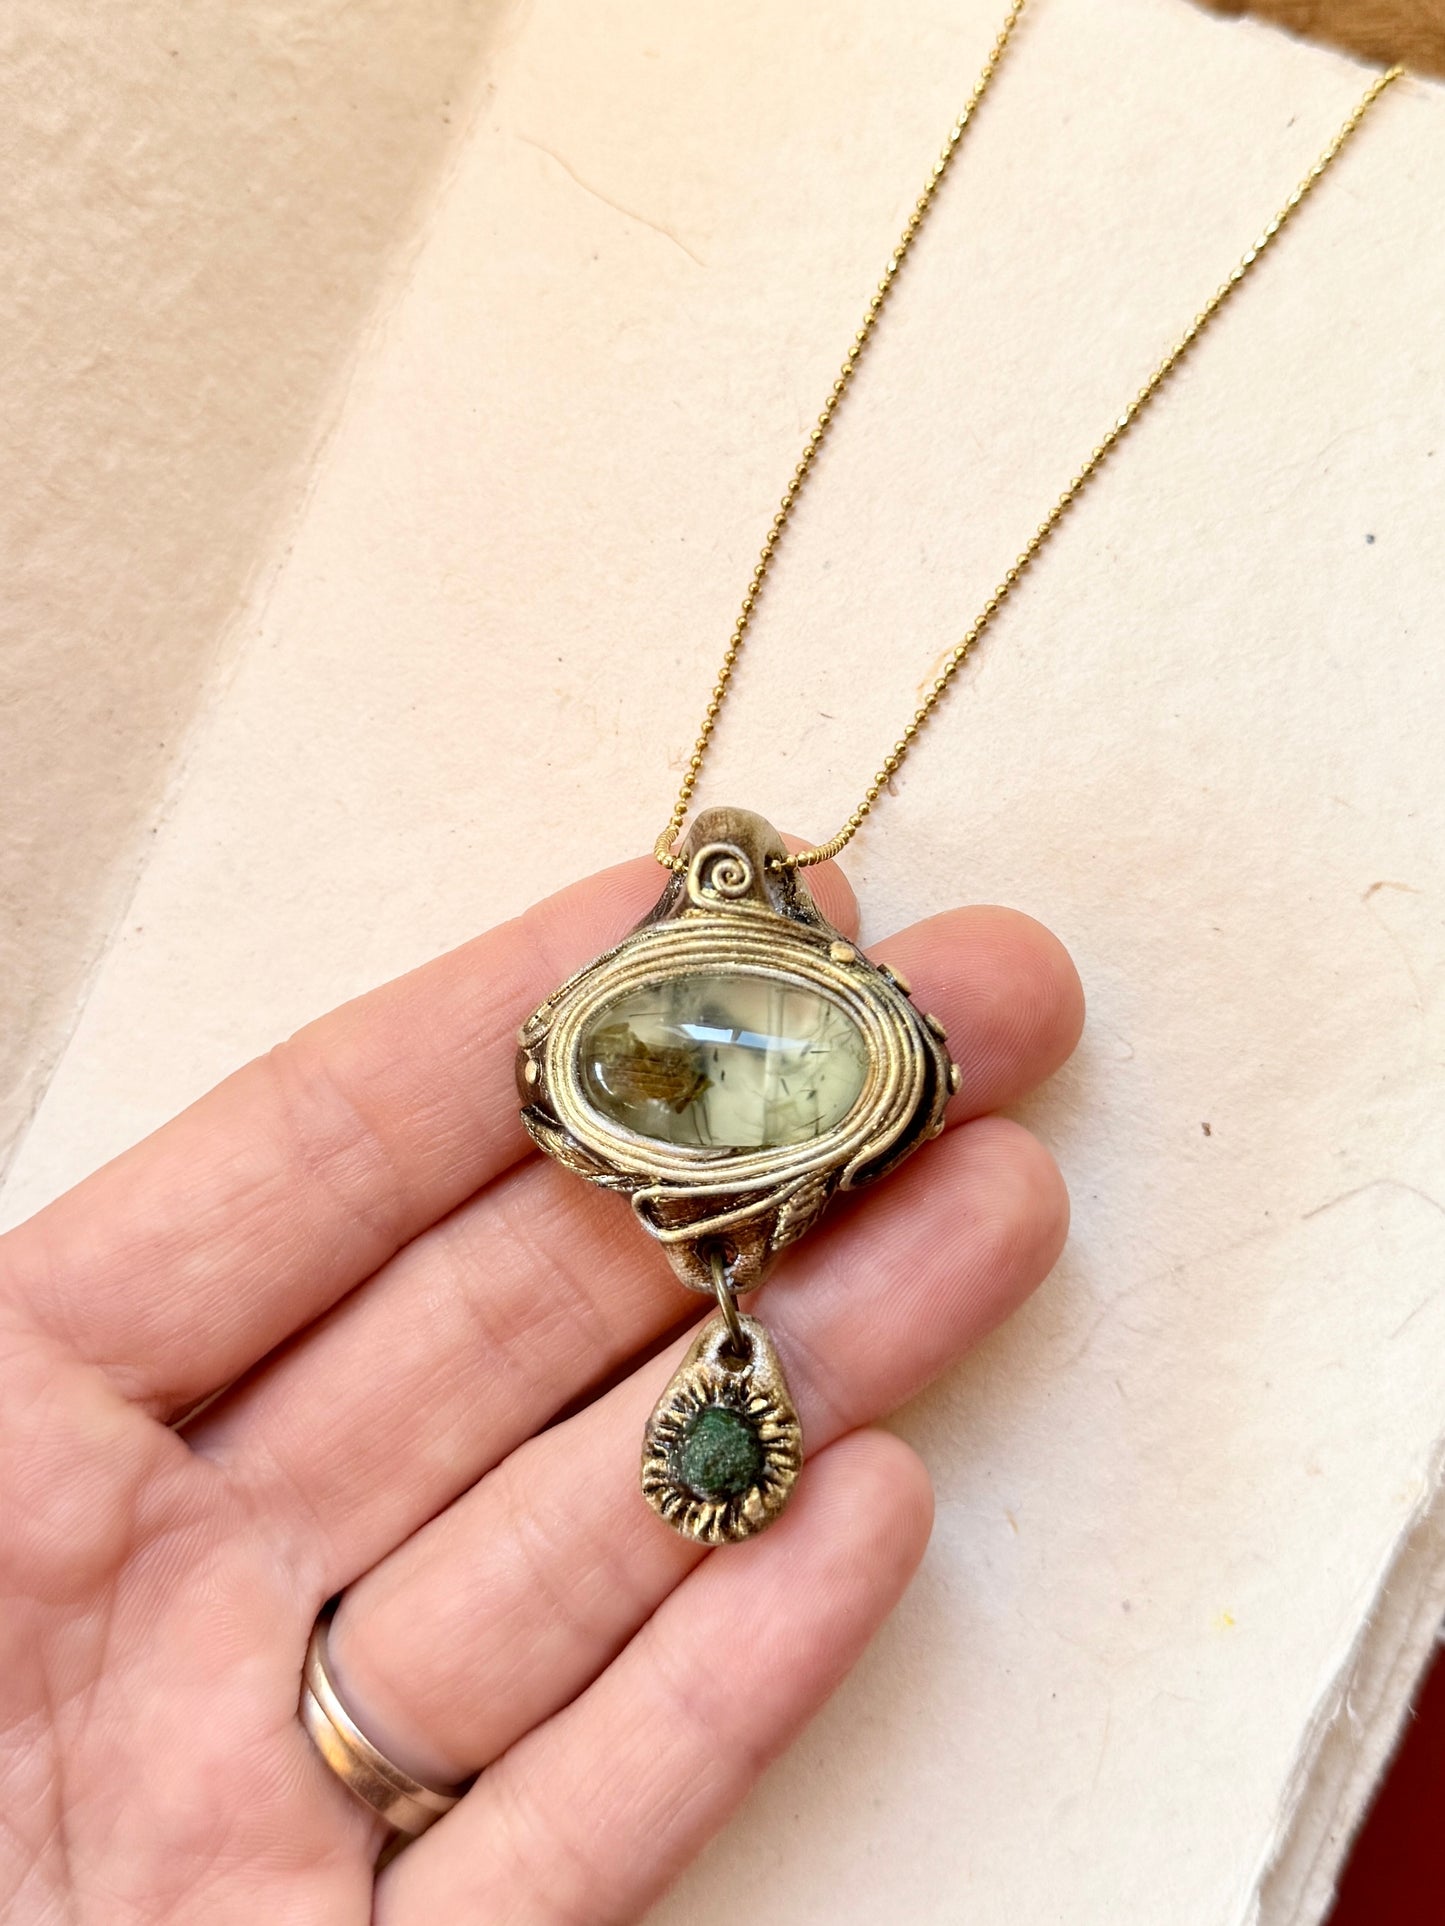 Prehnite and Malachite Woodland Necklace - Two Piece Green Gemstone